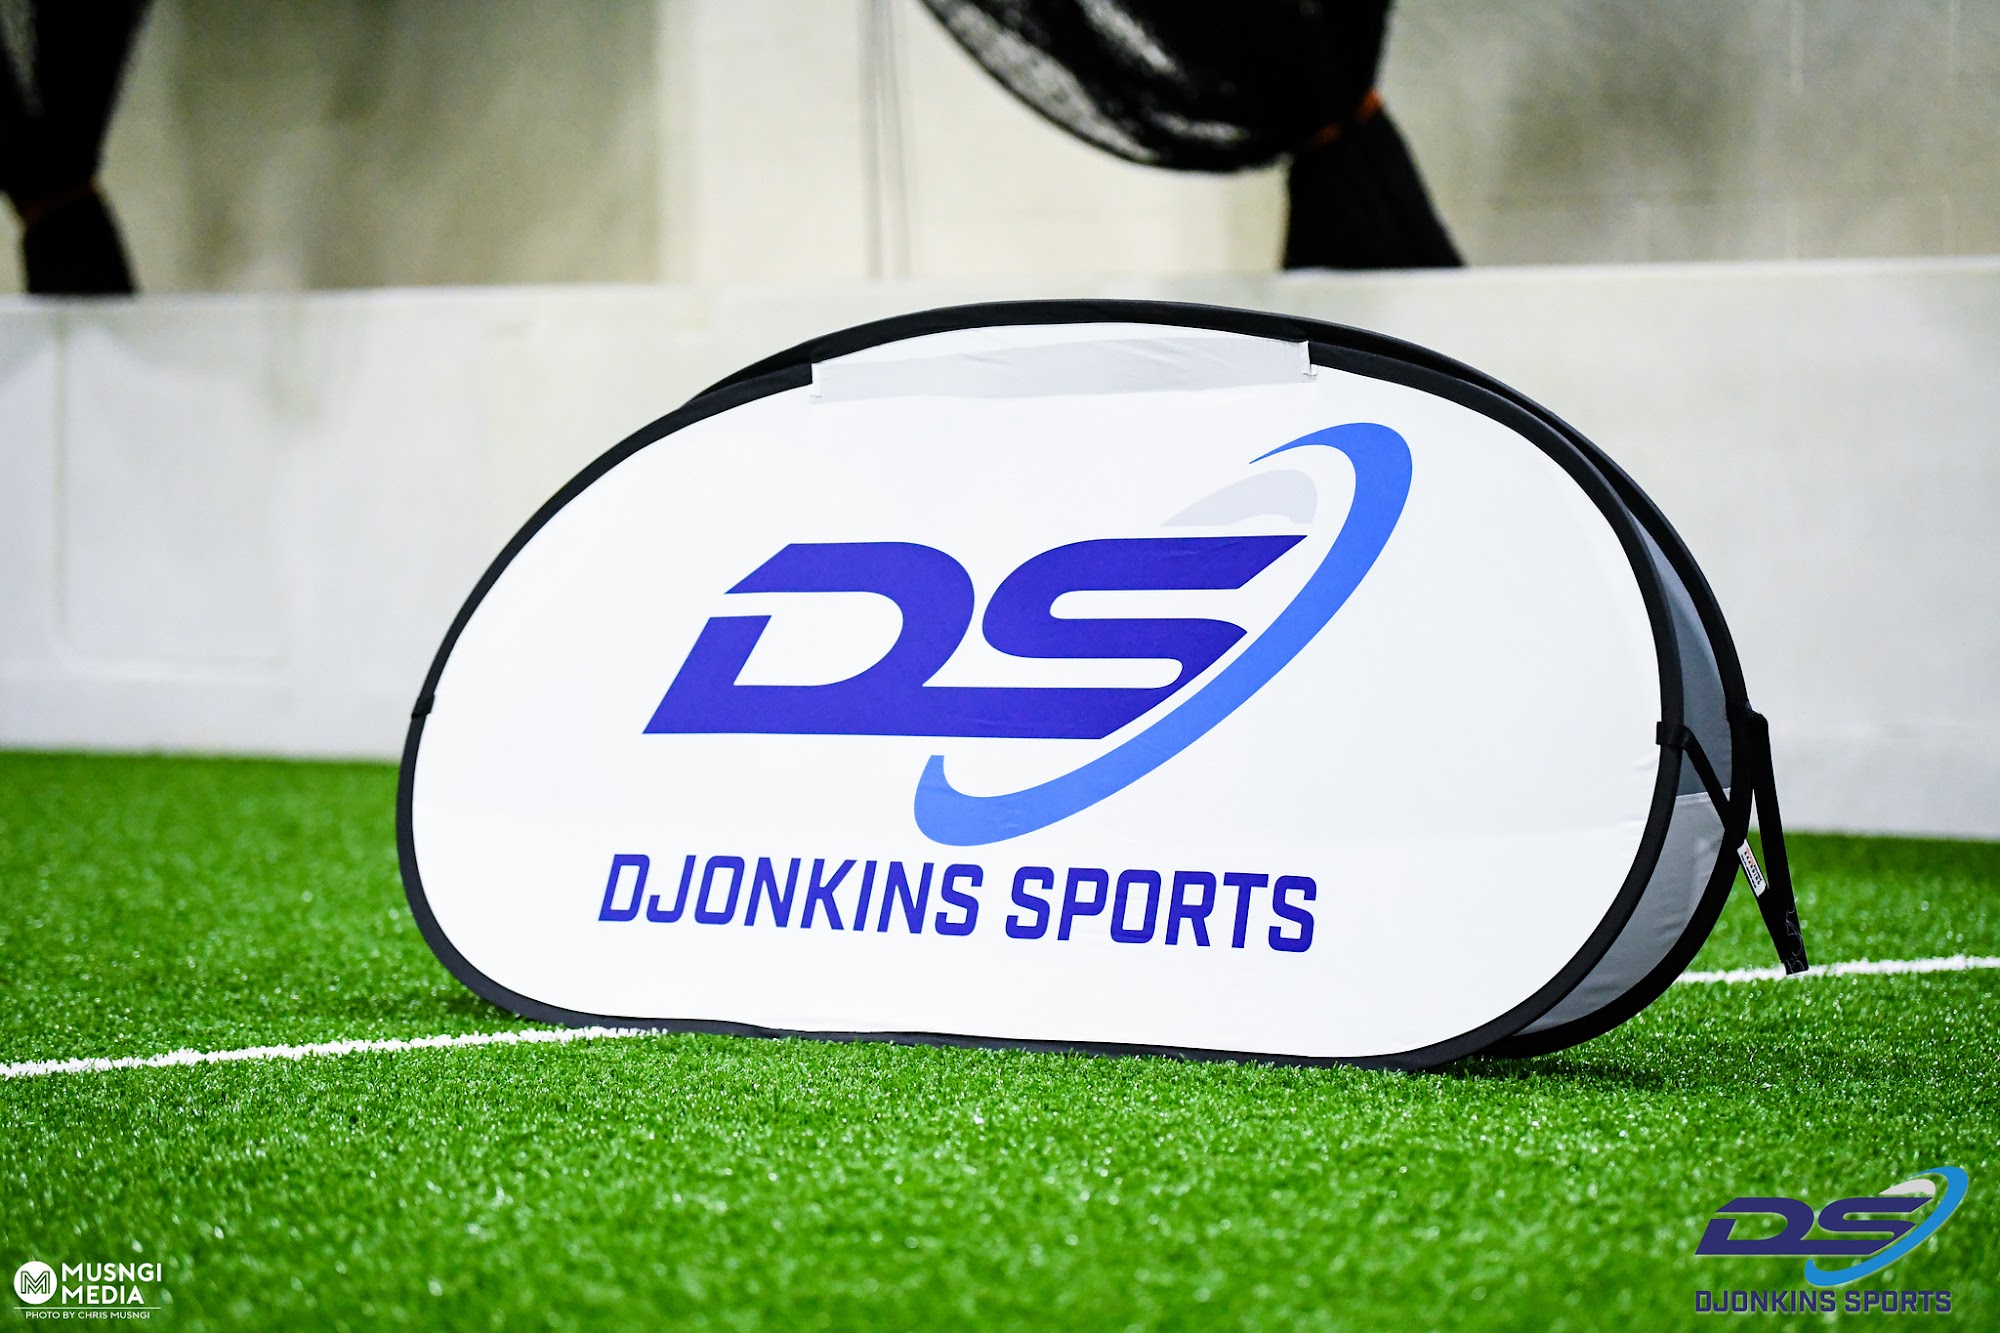 DJonkins Sports Fitness Center & Sports Training